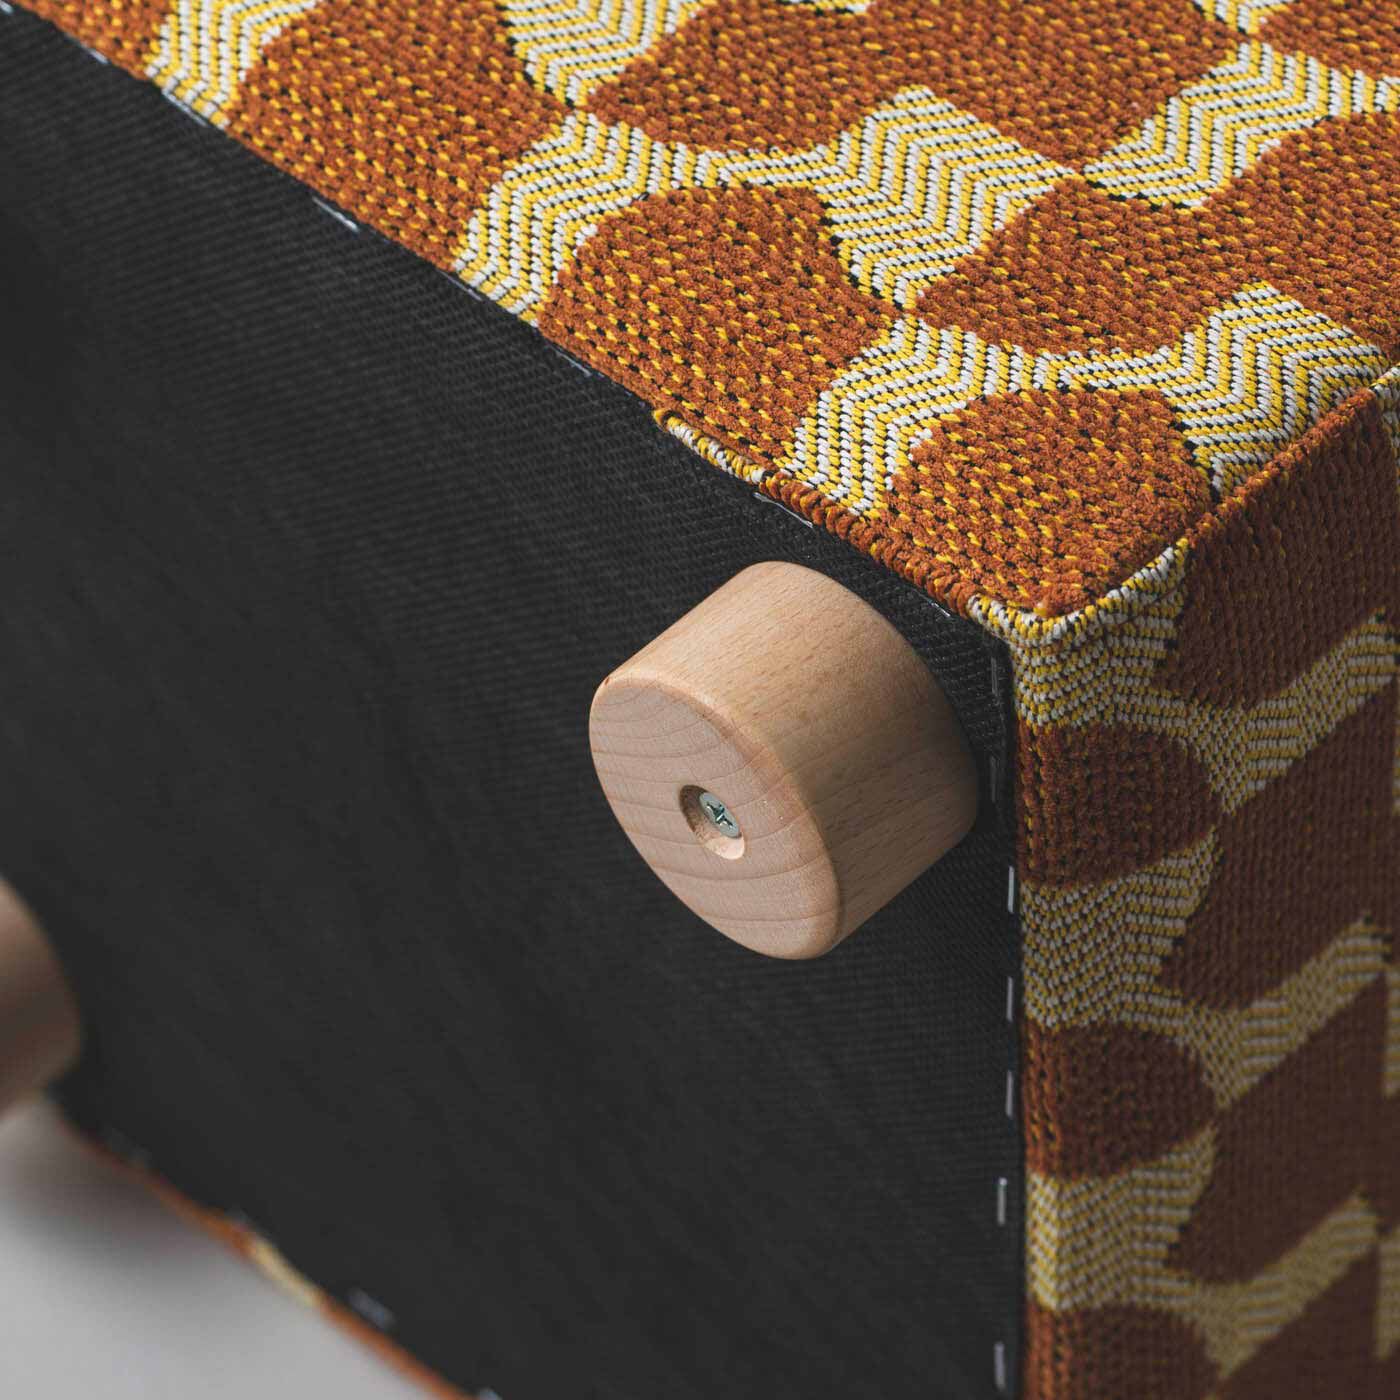 ＆Stories|テキスタイルデザイナーと家具職人が作った 播州ジャカード織のスツール〈レモンティー色〉|付属のフェルトシートを貼ってご使用いただけます。